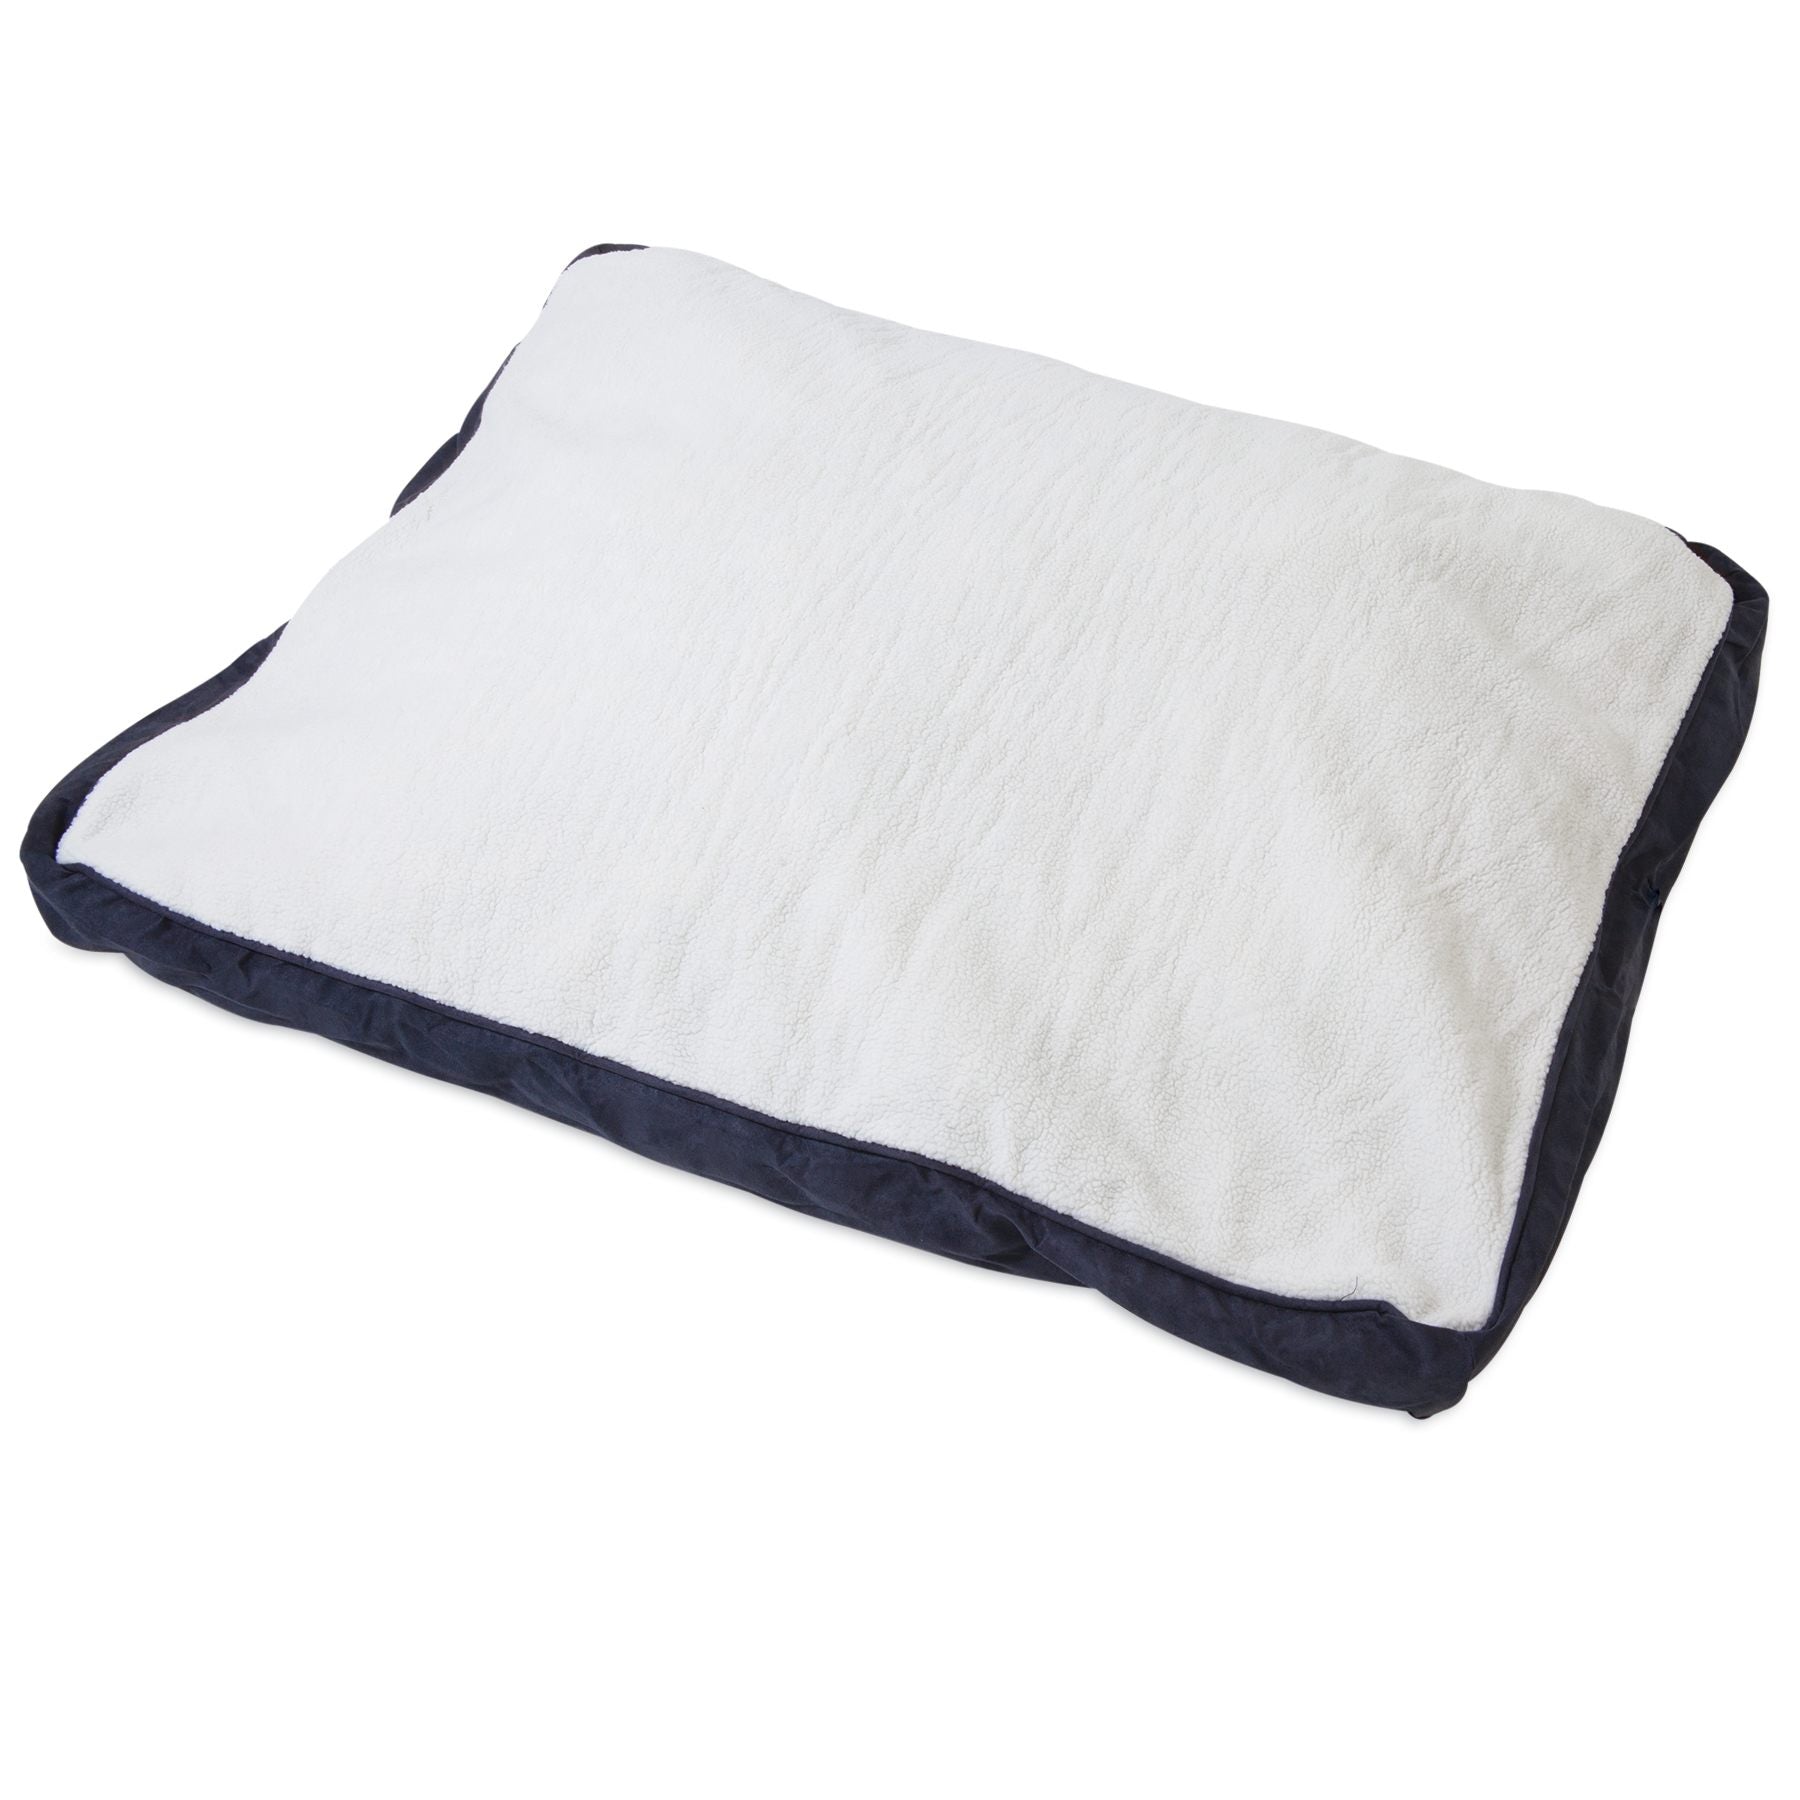 SnooZZy Orthopedic Foam Pillow Mattress - Indigo